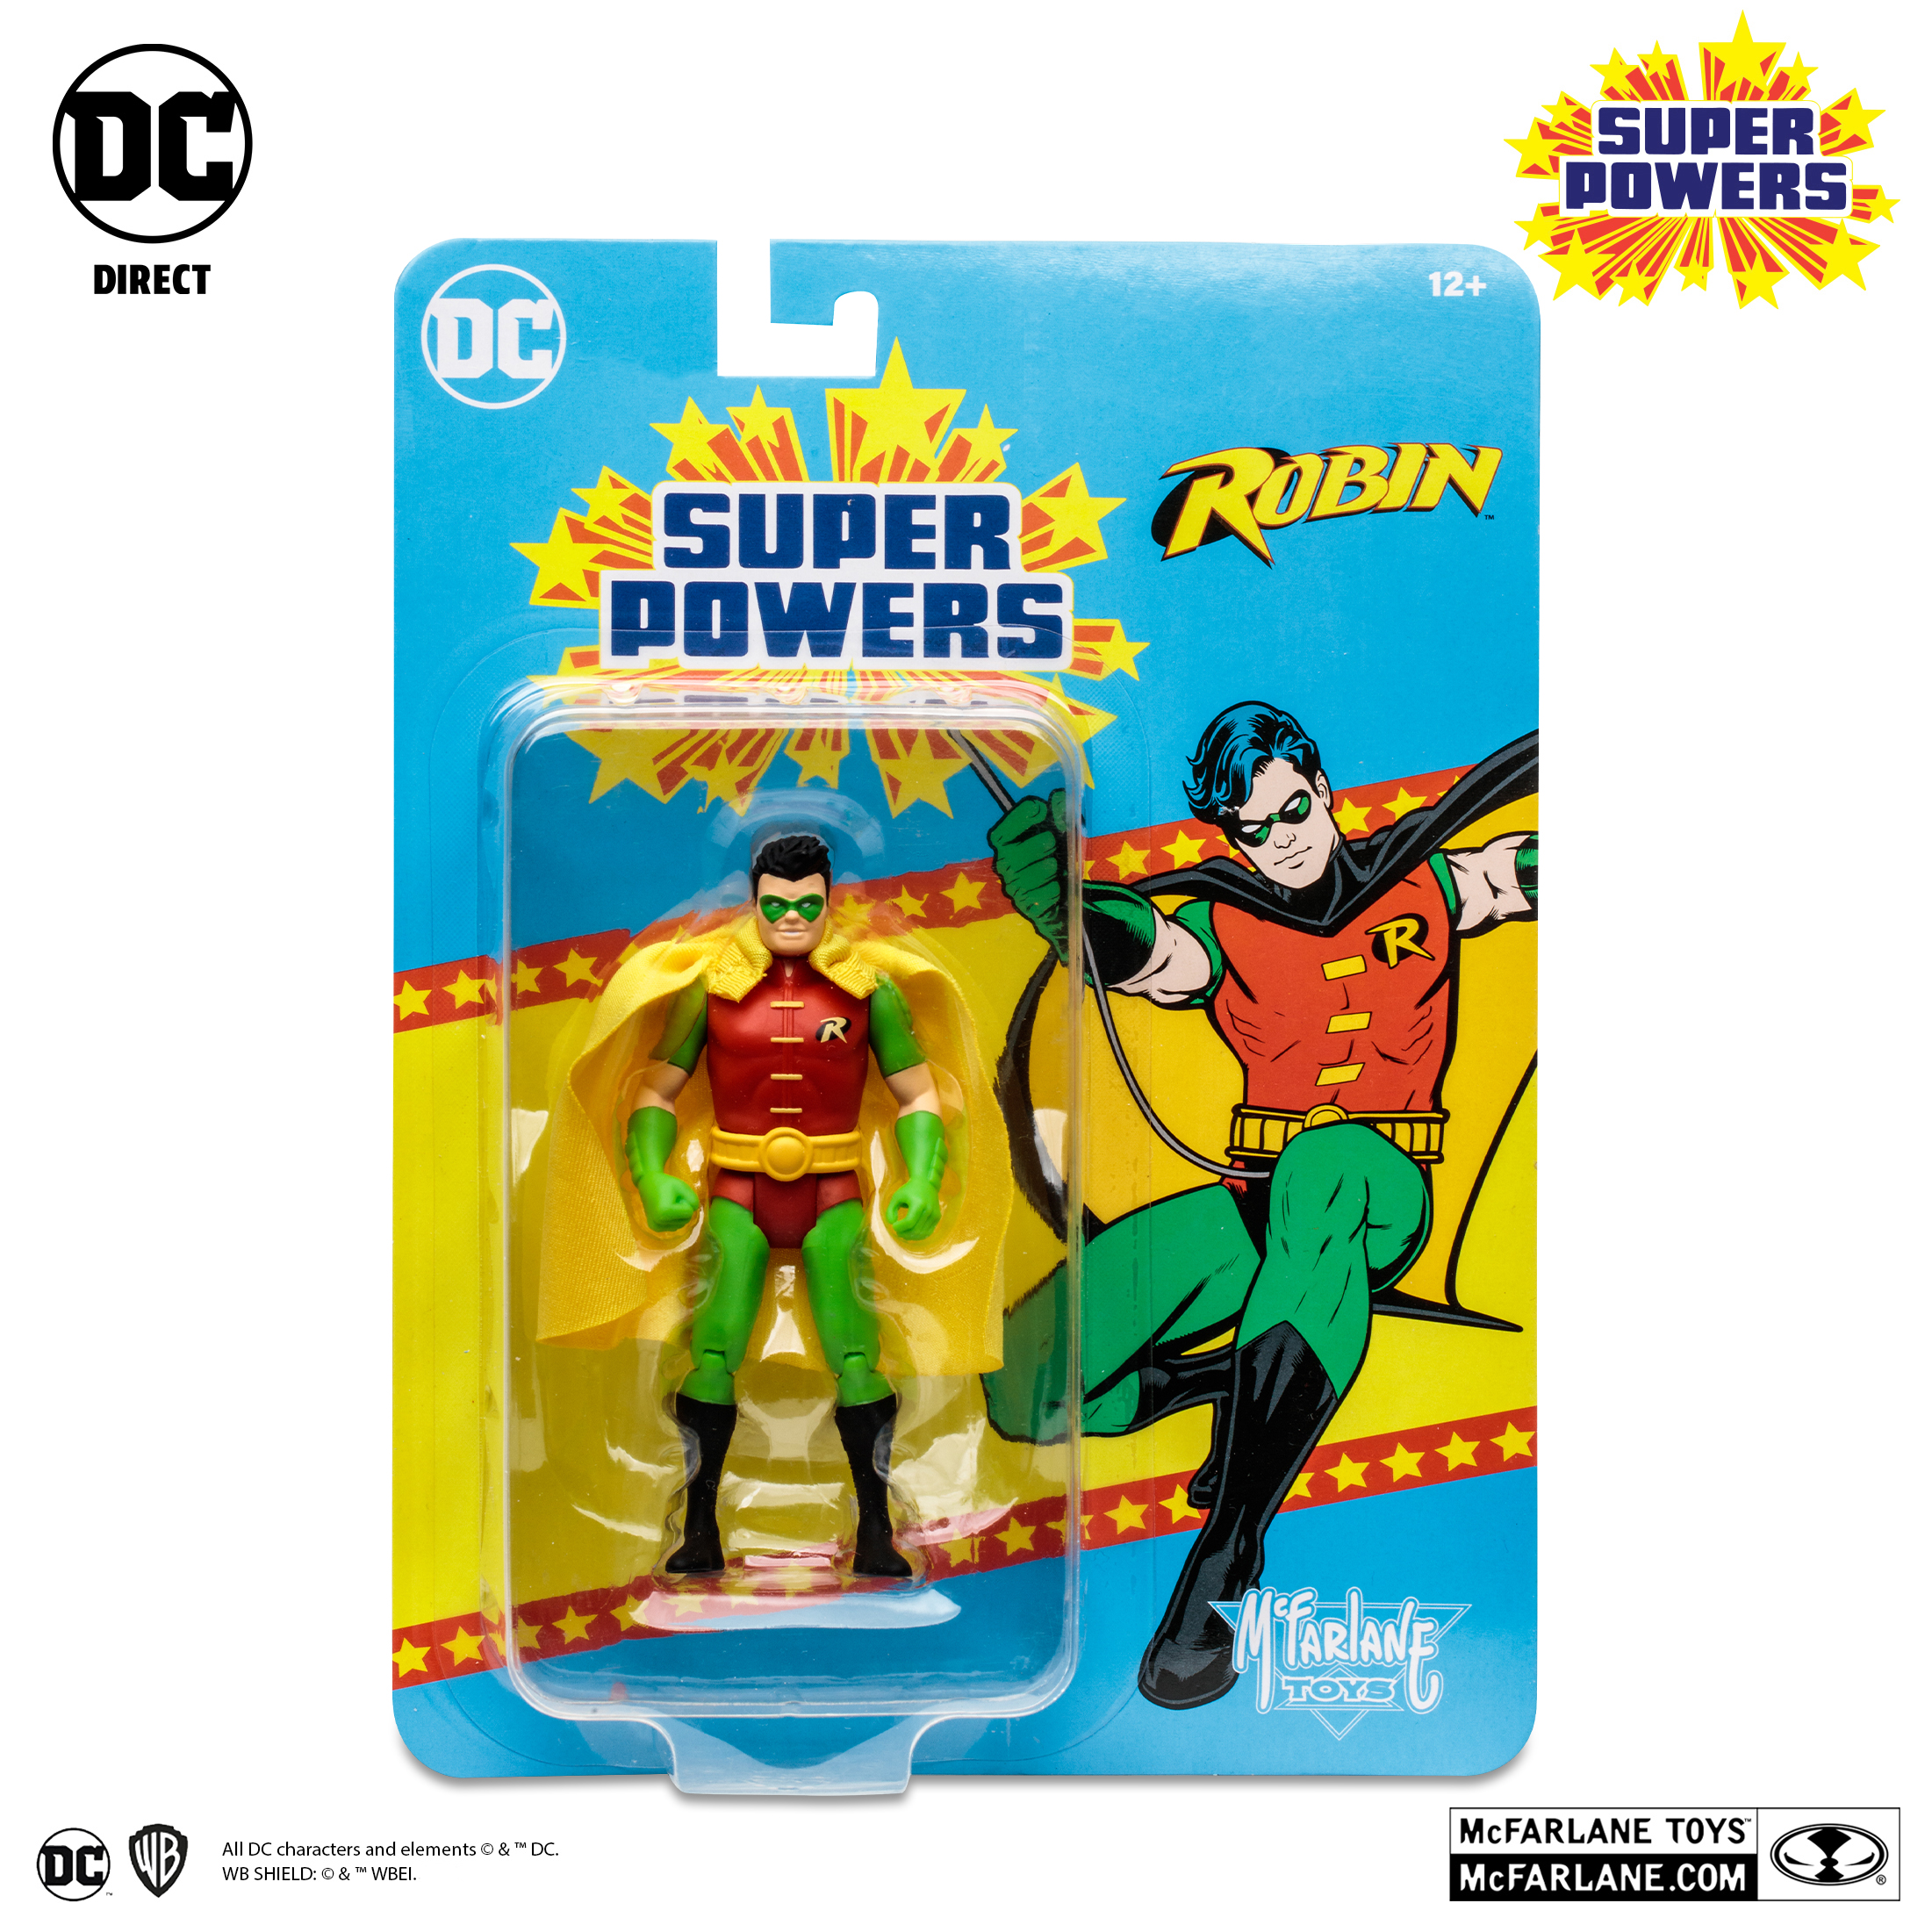 McFarlane Toys DC Super Powers Robin Action Figure